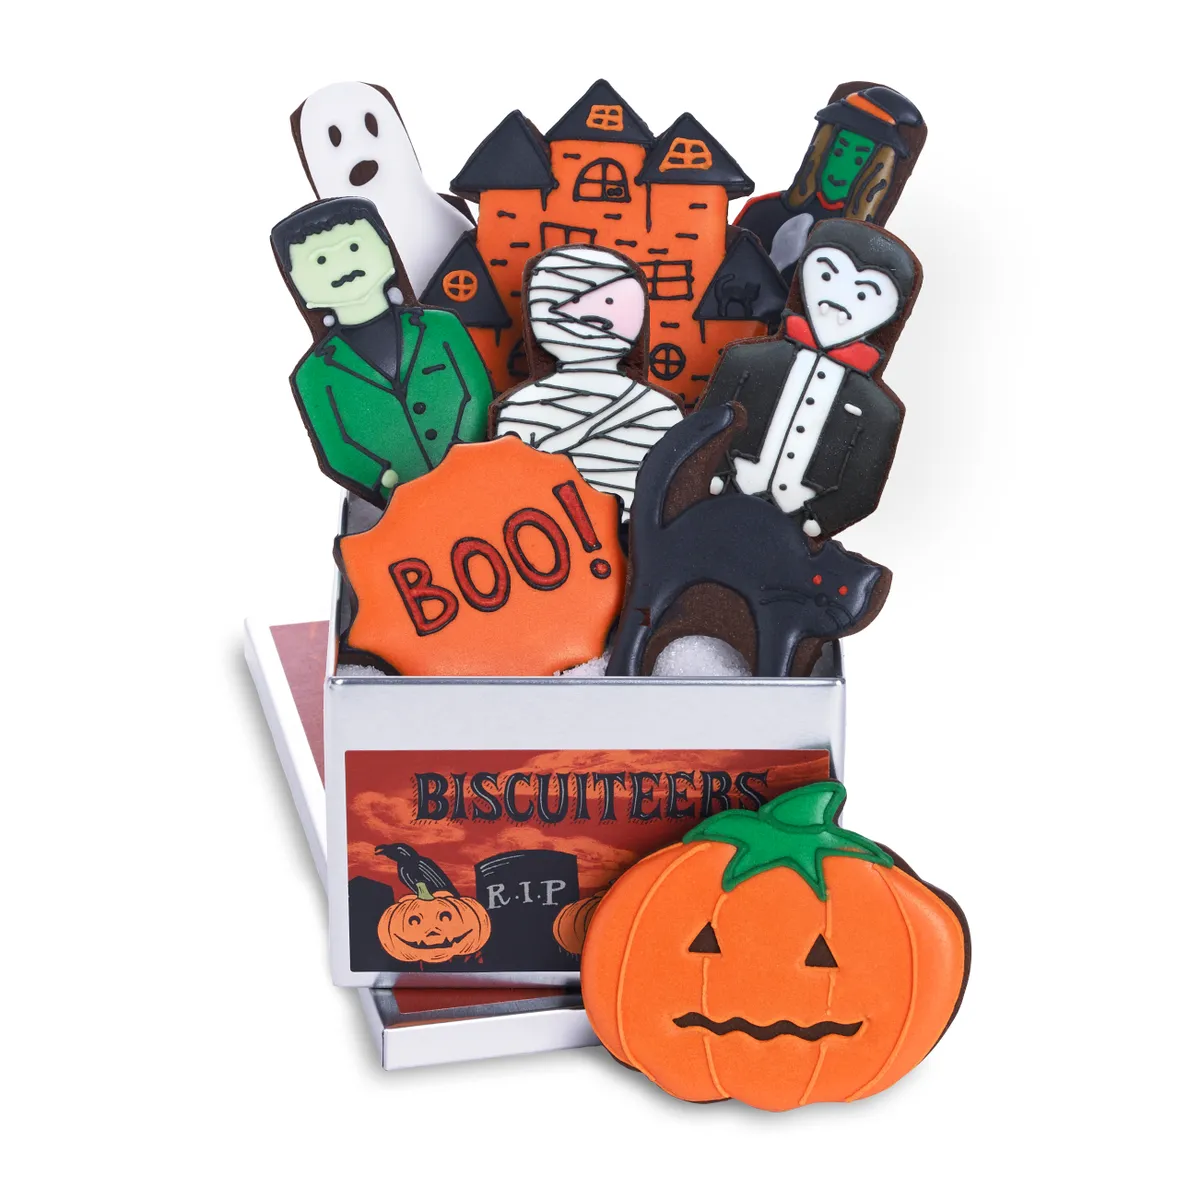 A Biscuiteers Haunted House biscuit tin featuring edible biscuit pumpkins, mummies, vampires and Frankenstein's monster